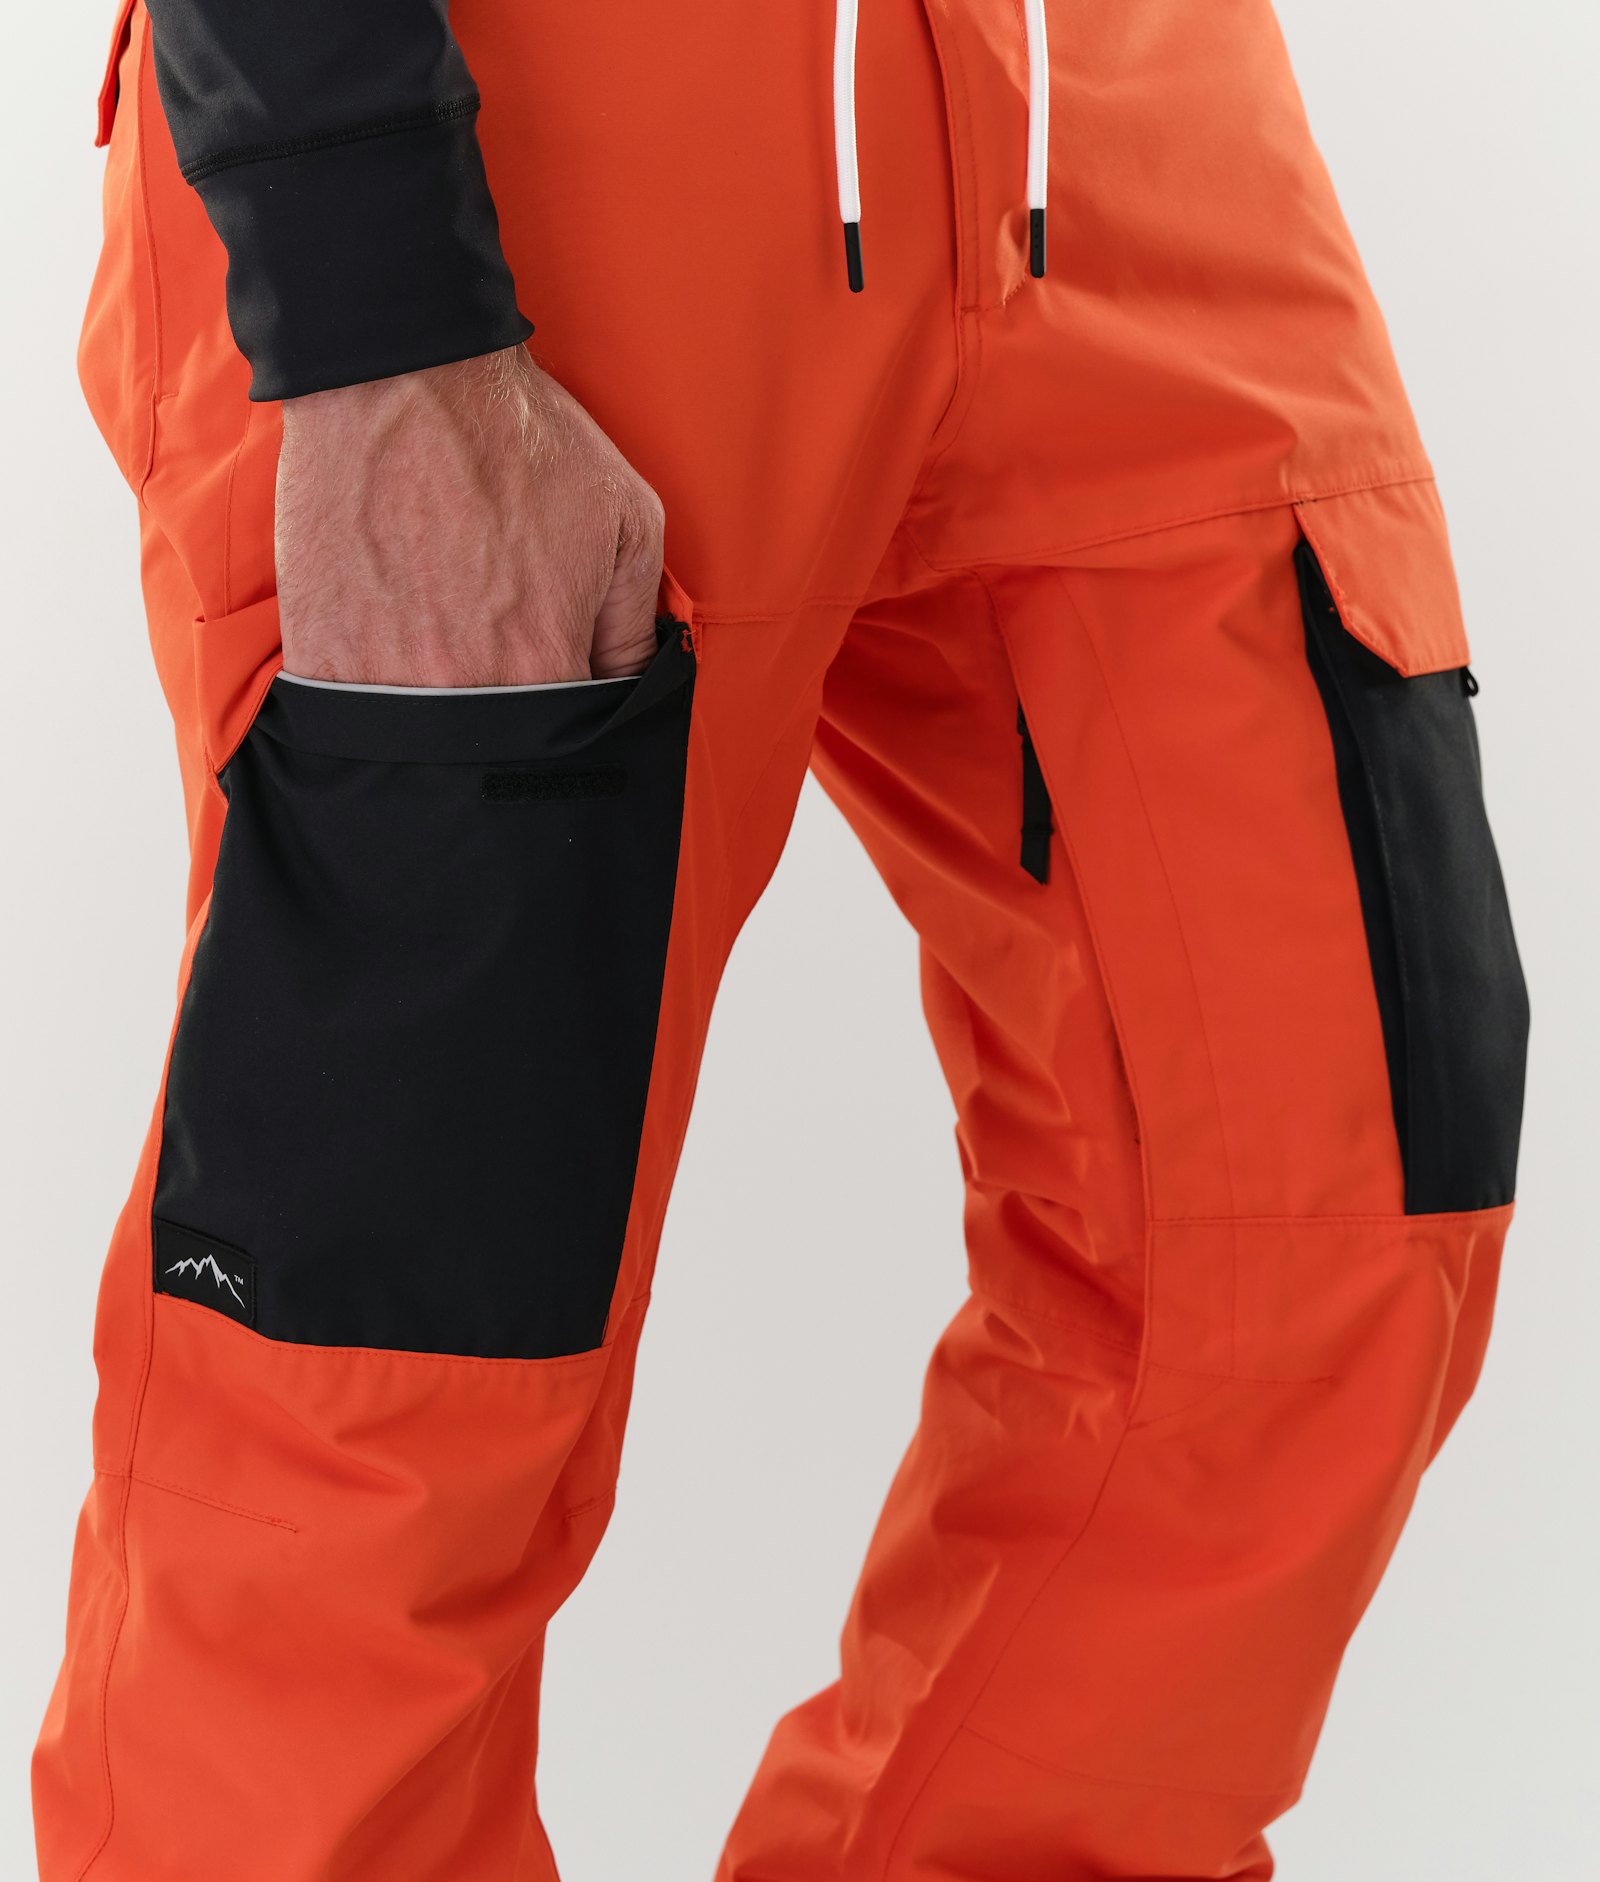 Dope Poise 2019 Snowboardhose Herren Orange/Black